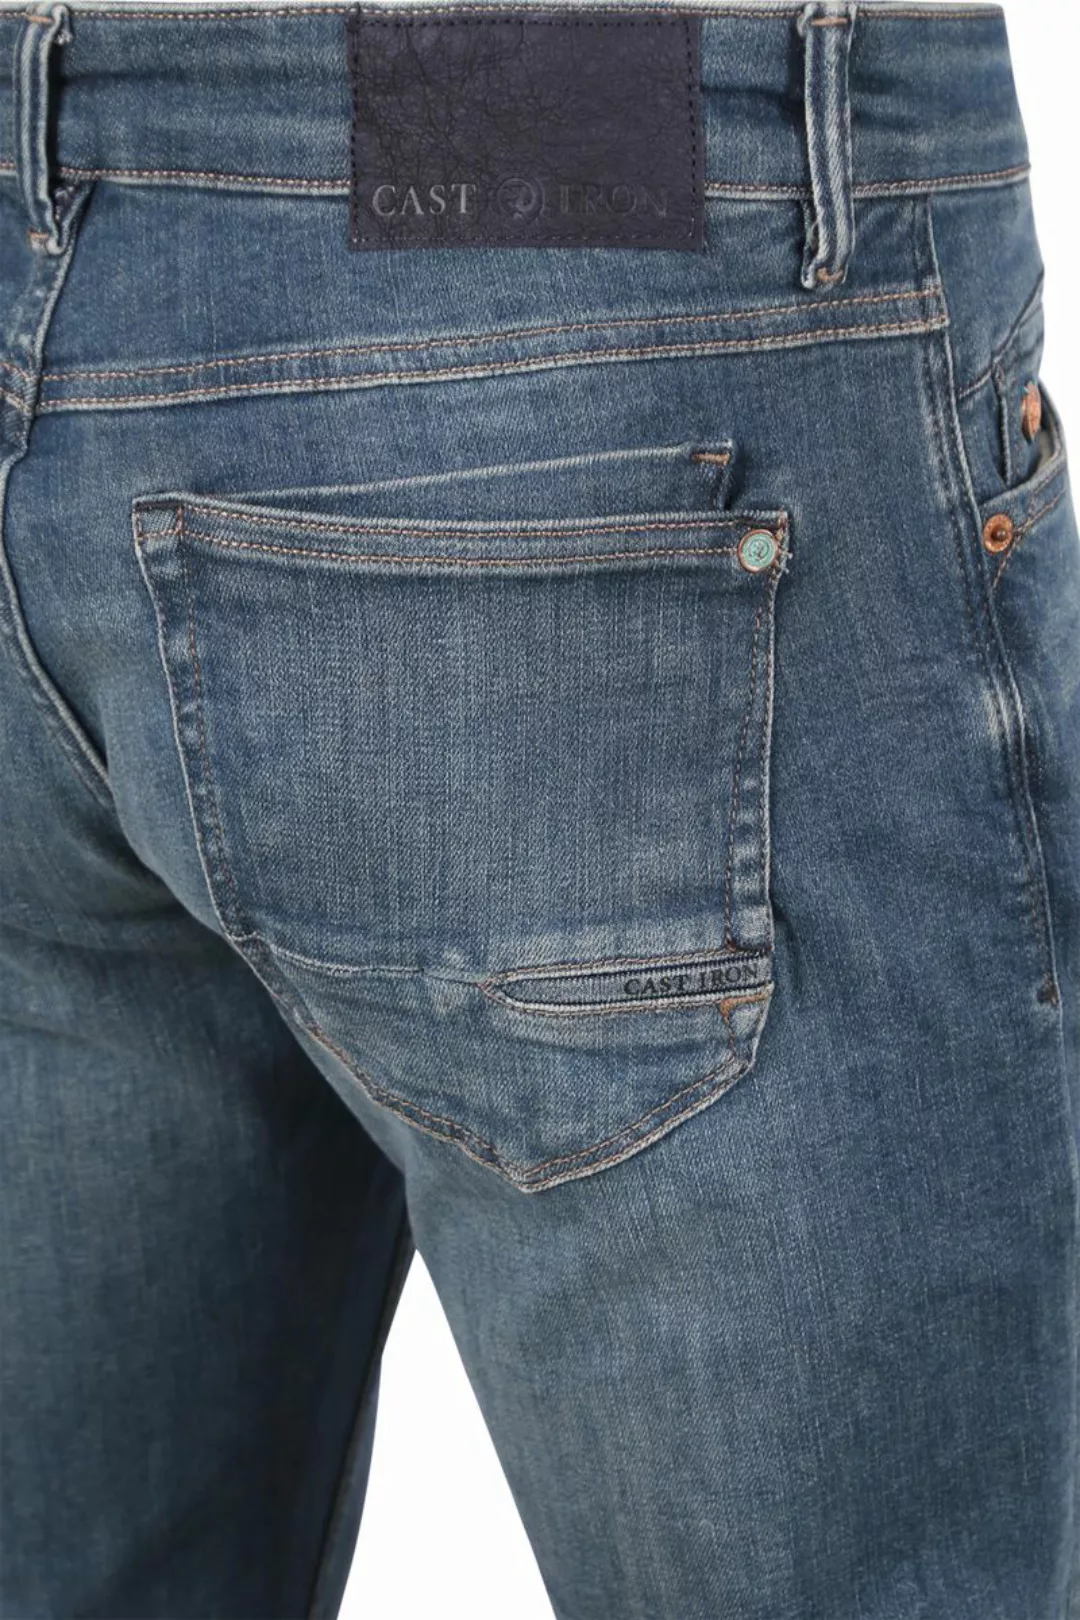 Cast Iron Shiftback Jeans Blau NBD - Größe W 31 - L 34 günstig online kaufen